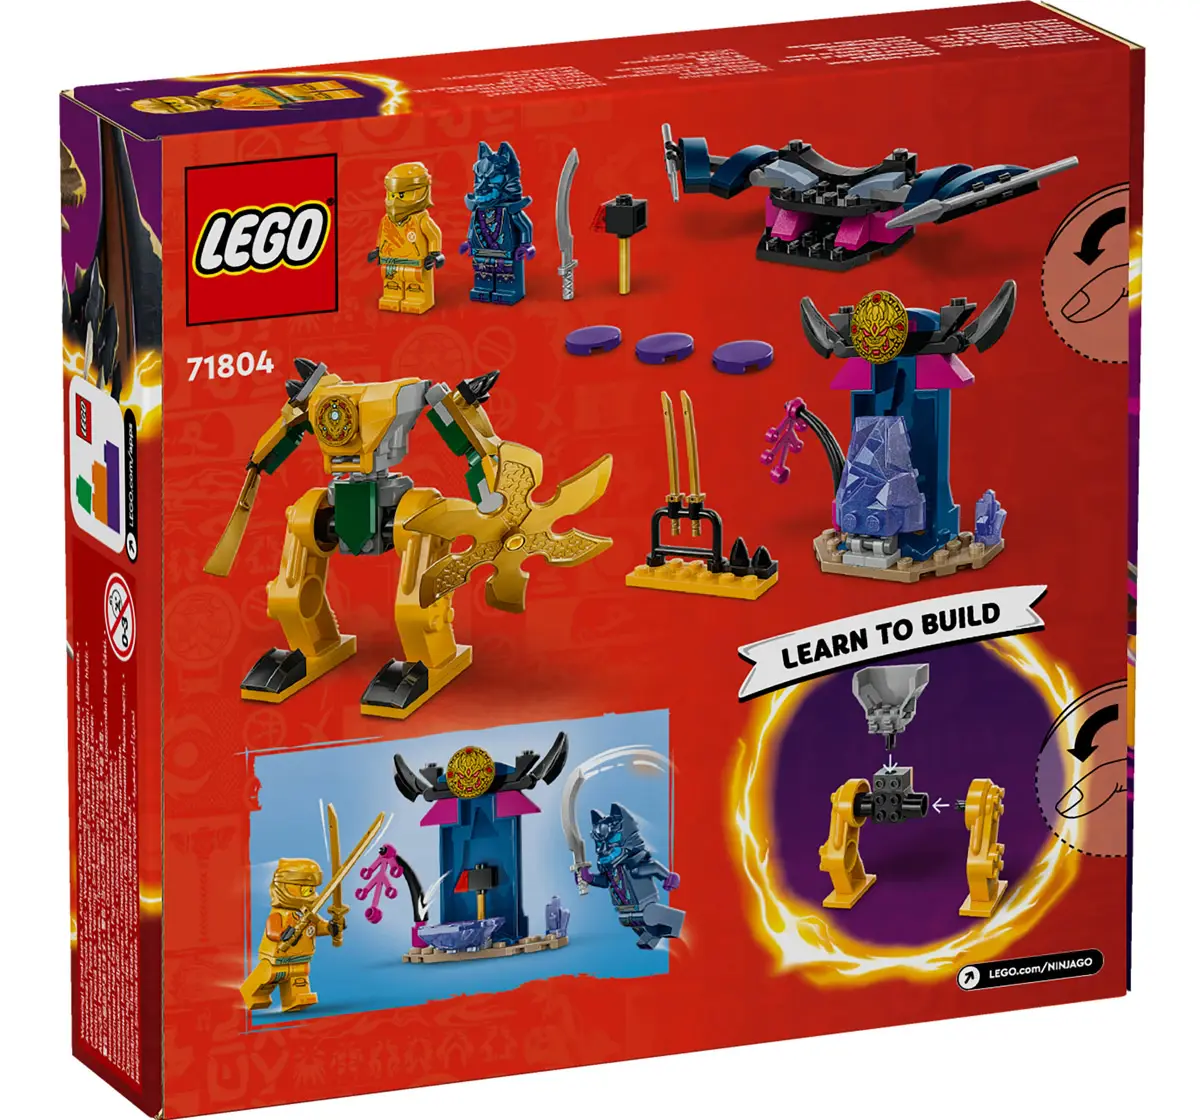 Lego Ninjago ArinS Battle Mech Ninja Toy Set 71804 Multicolour For Kids Ages 4Y+ (104 Pieces) 